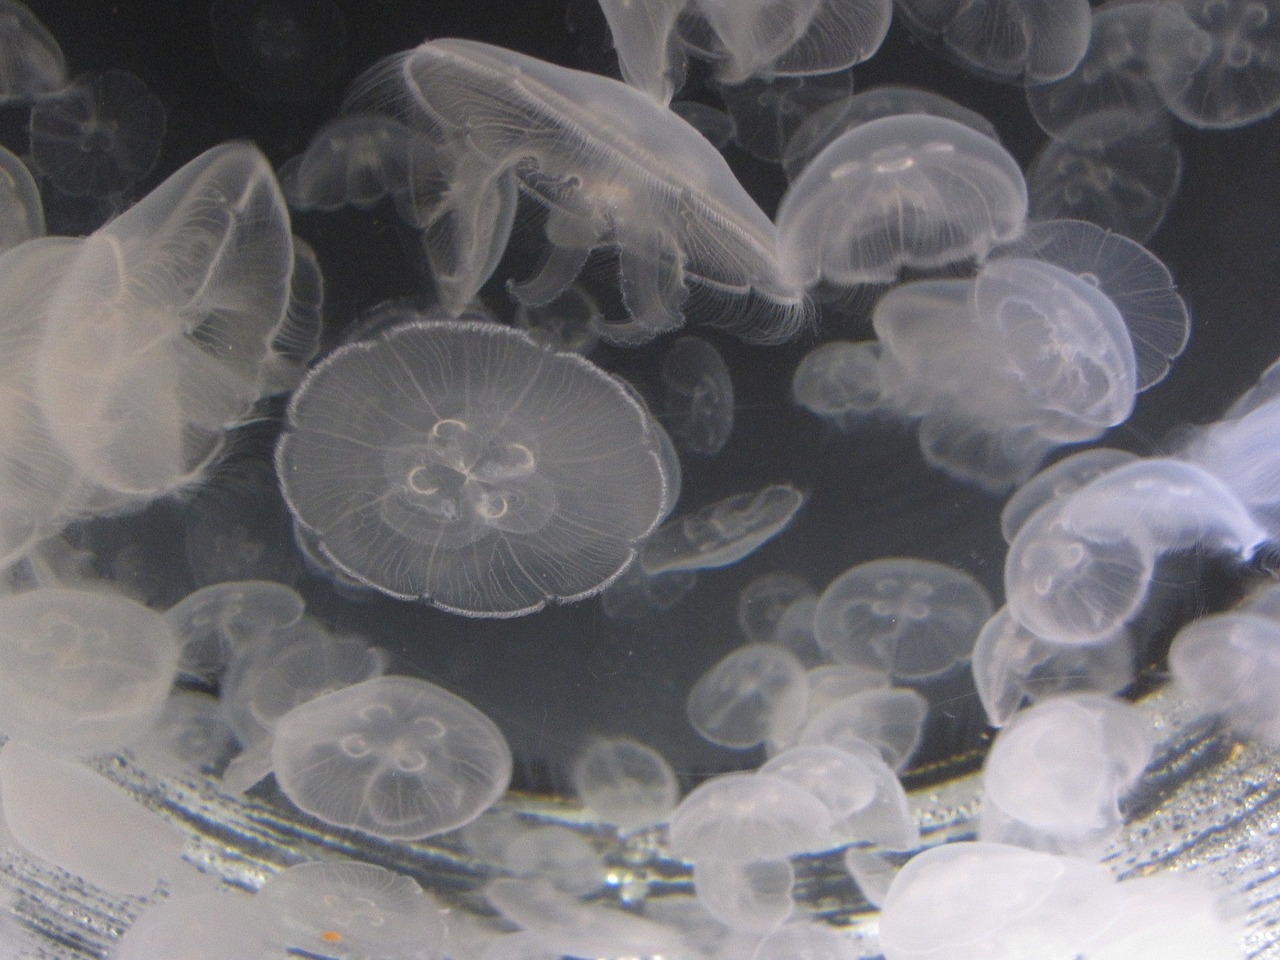 jelly fish water jellyfish free photo